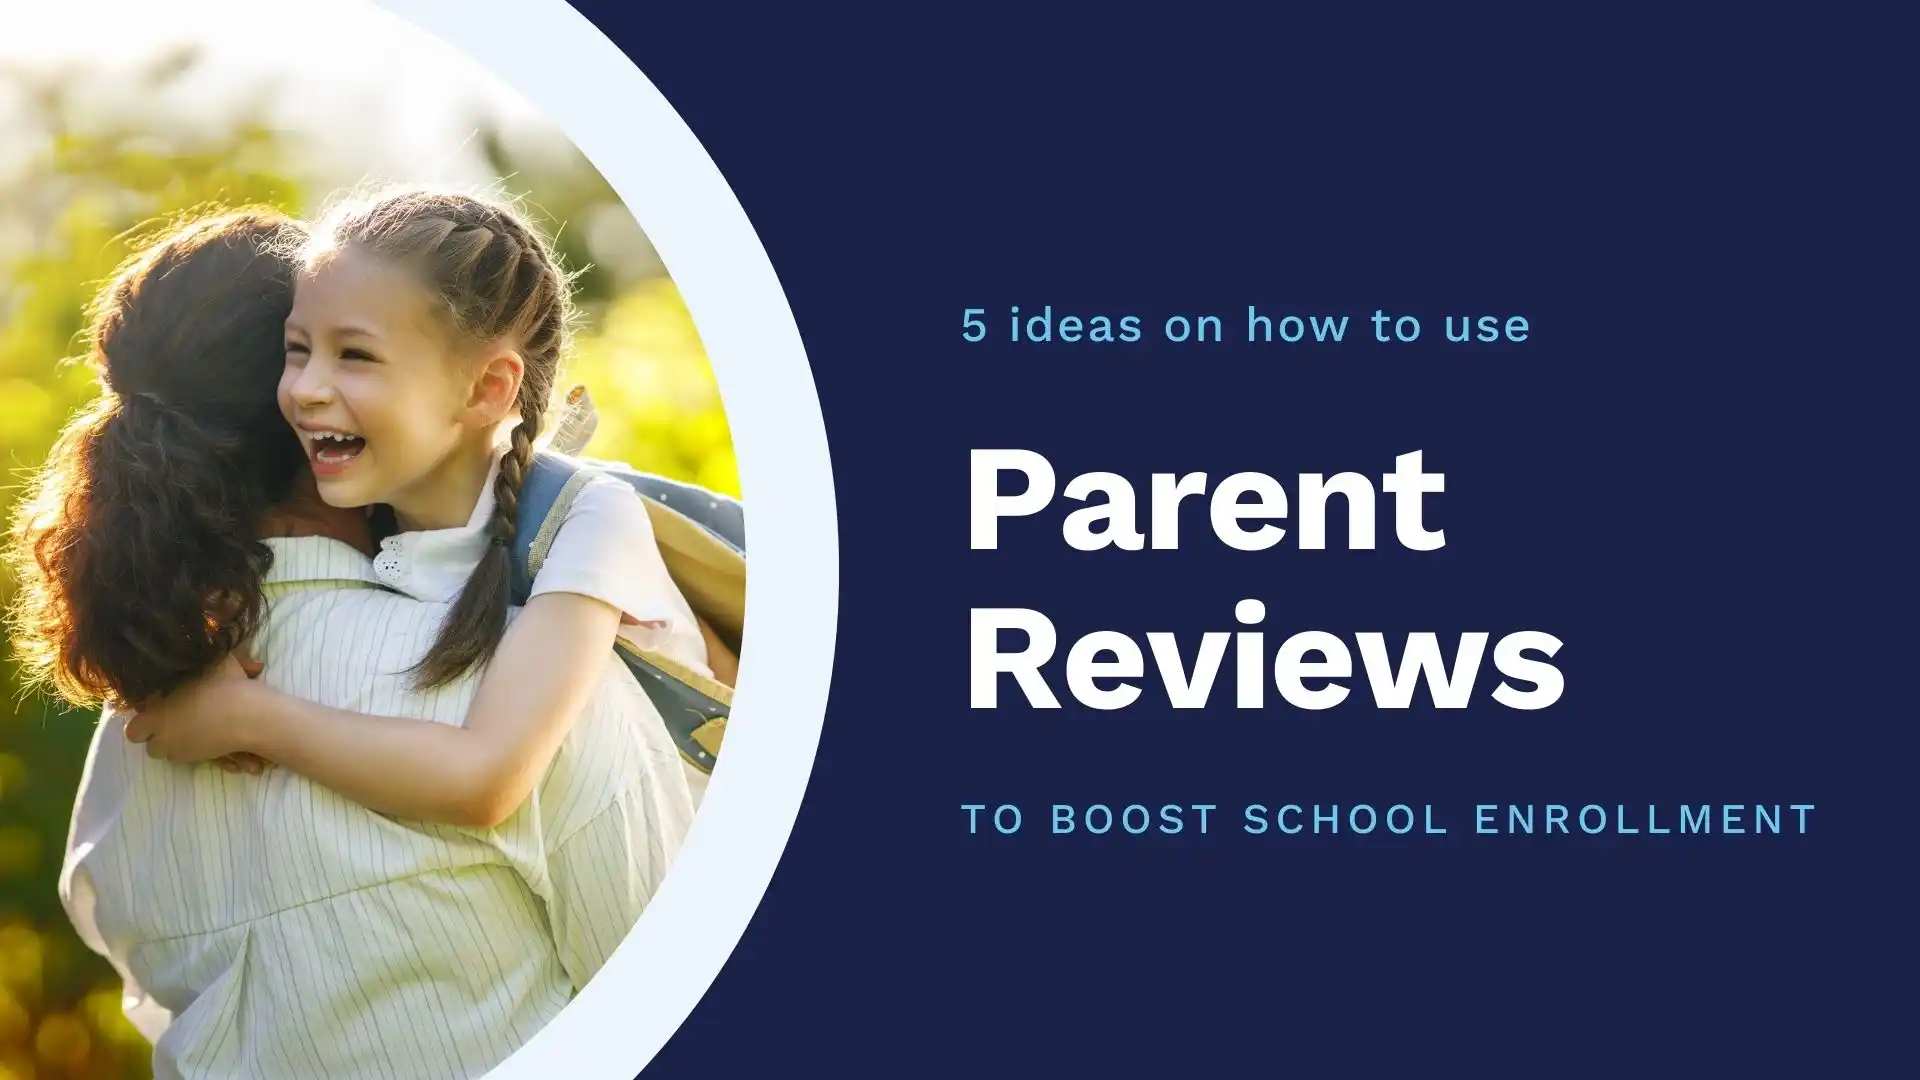 parent reviews marketing ideas